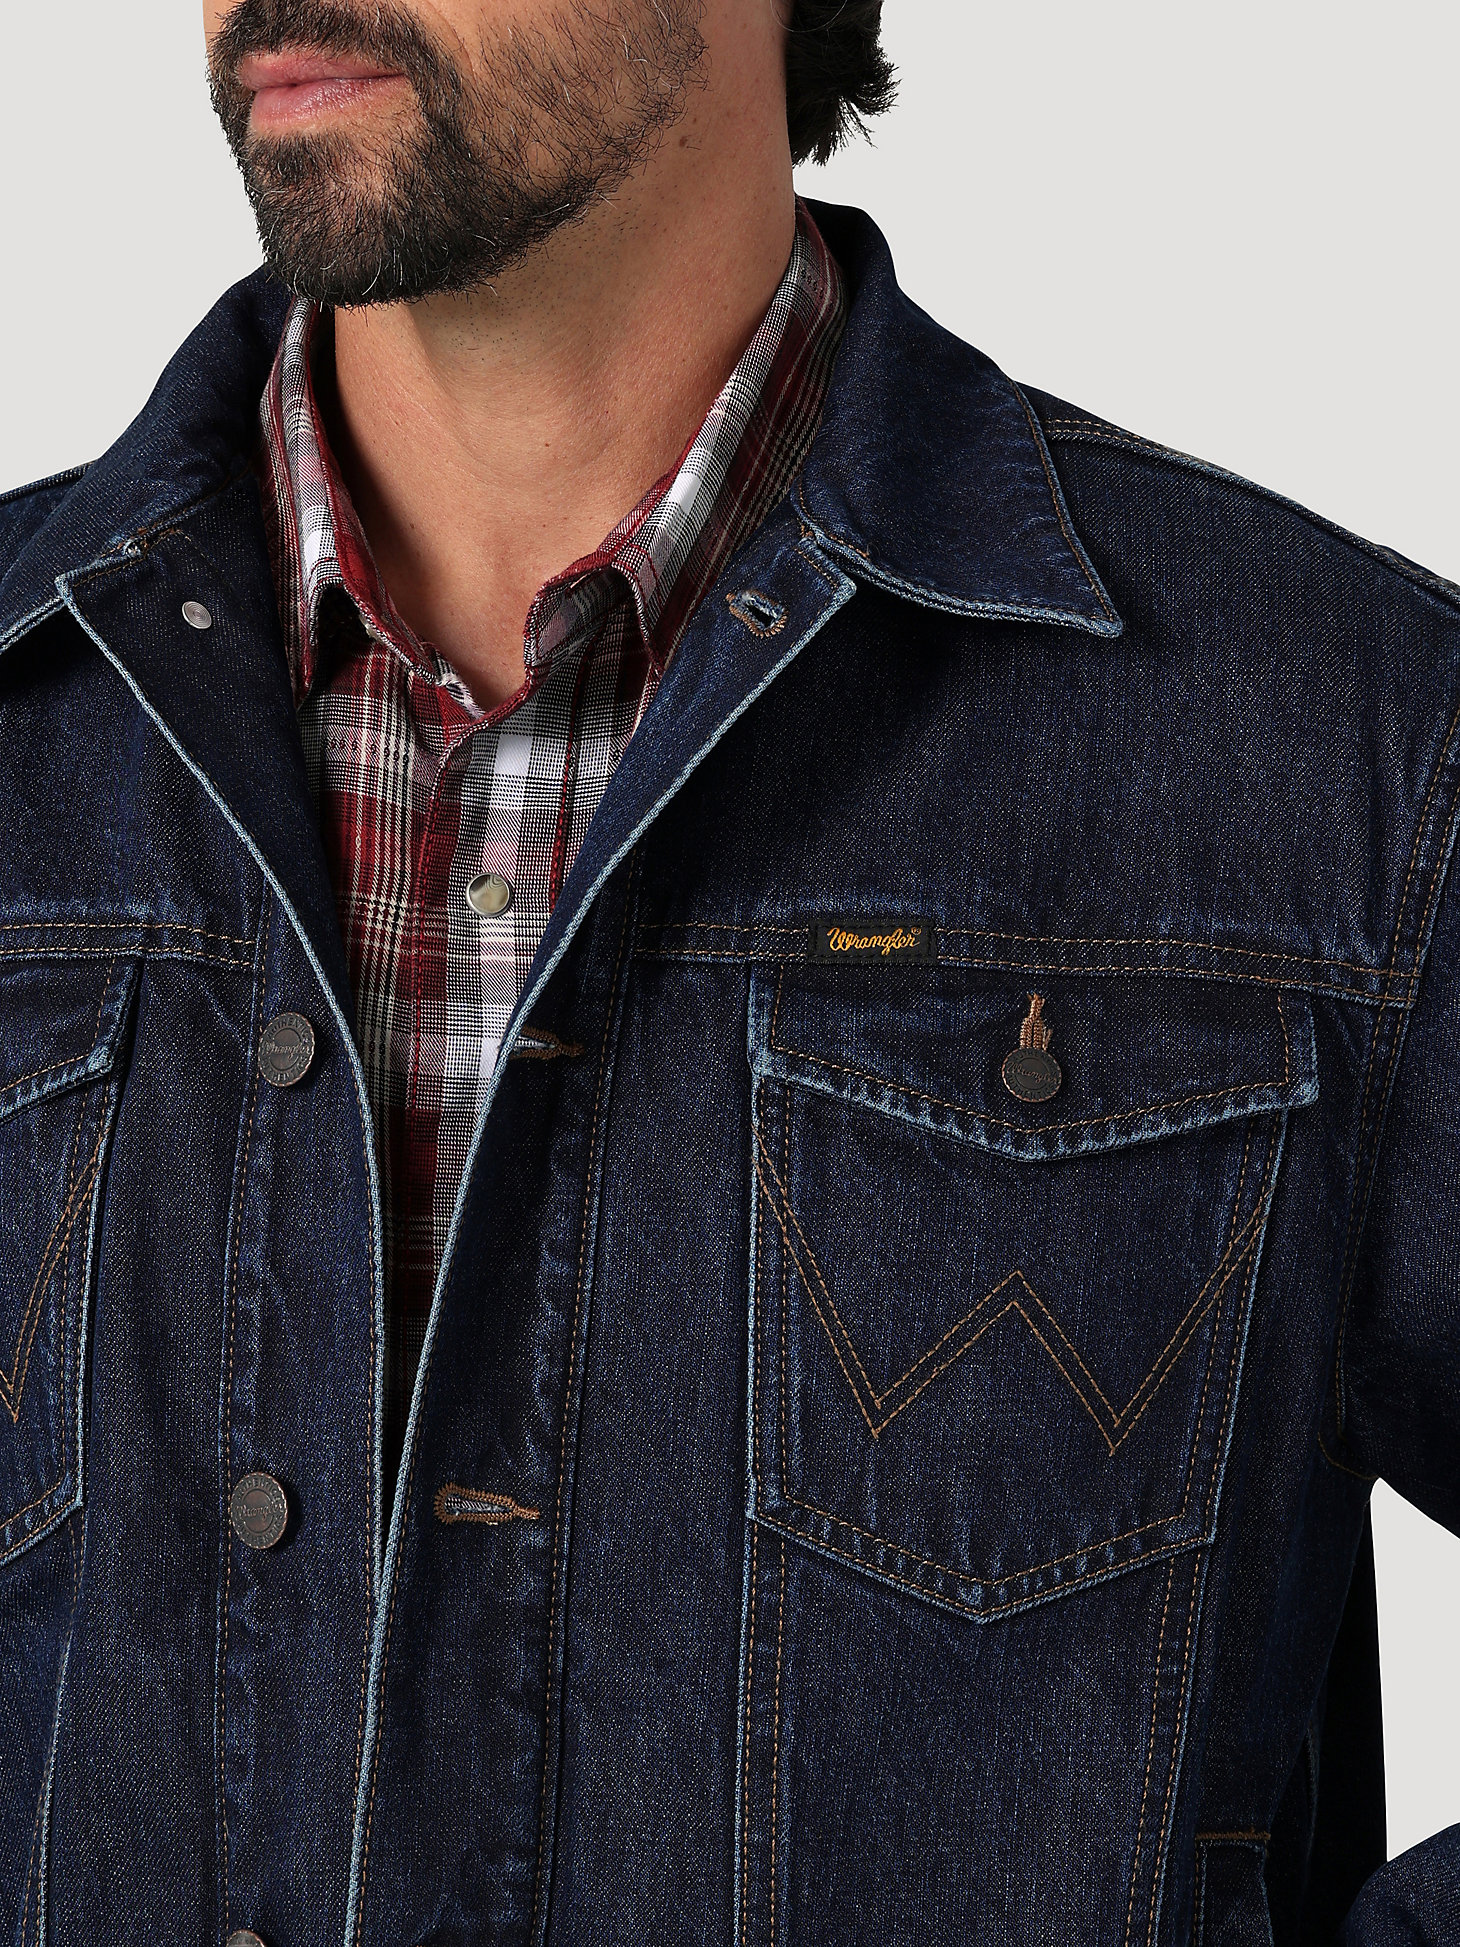 Men's Wrangler® Retro Unlined Denim Jacket in Bella Vista alternative view 2